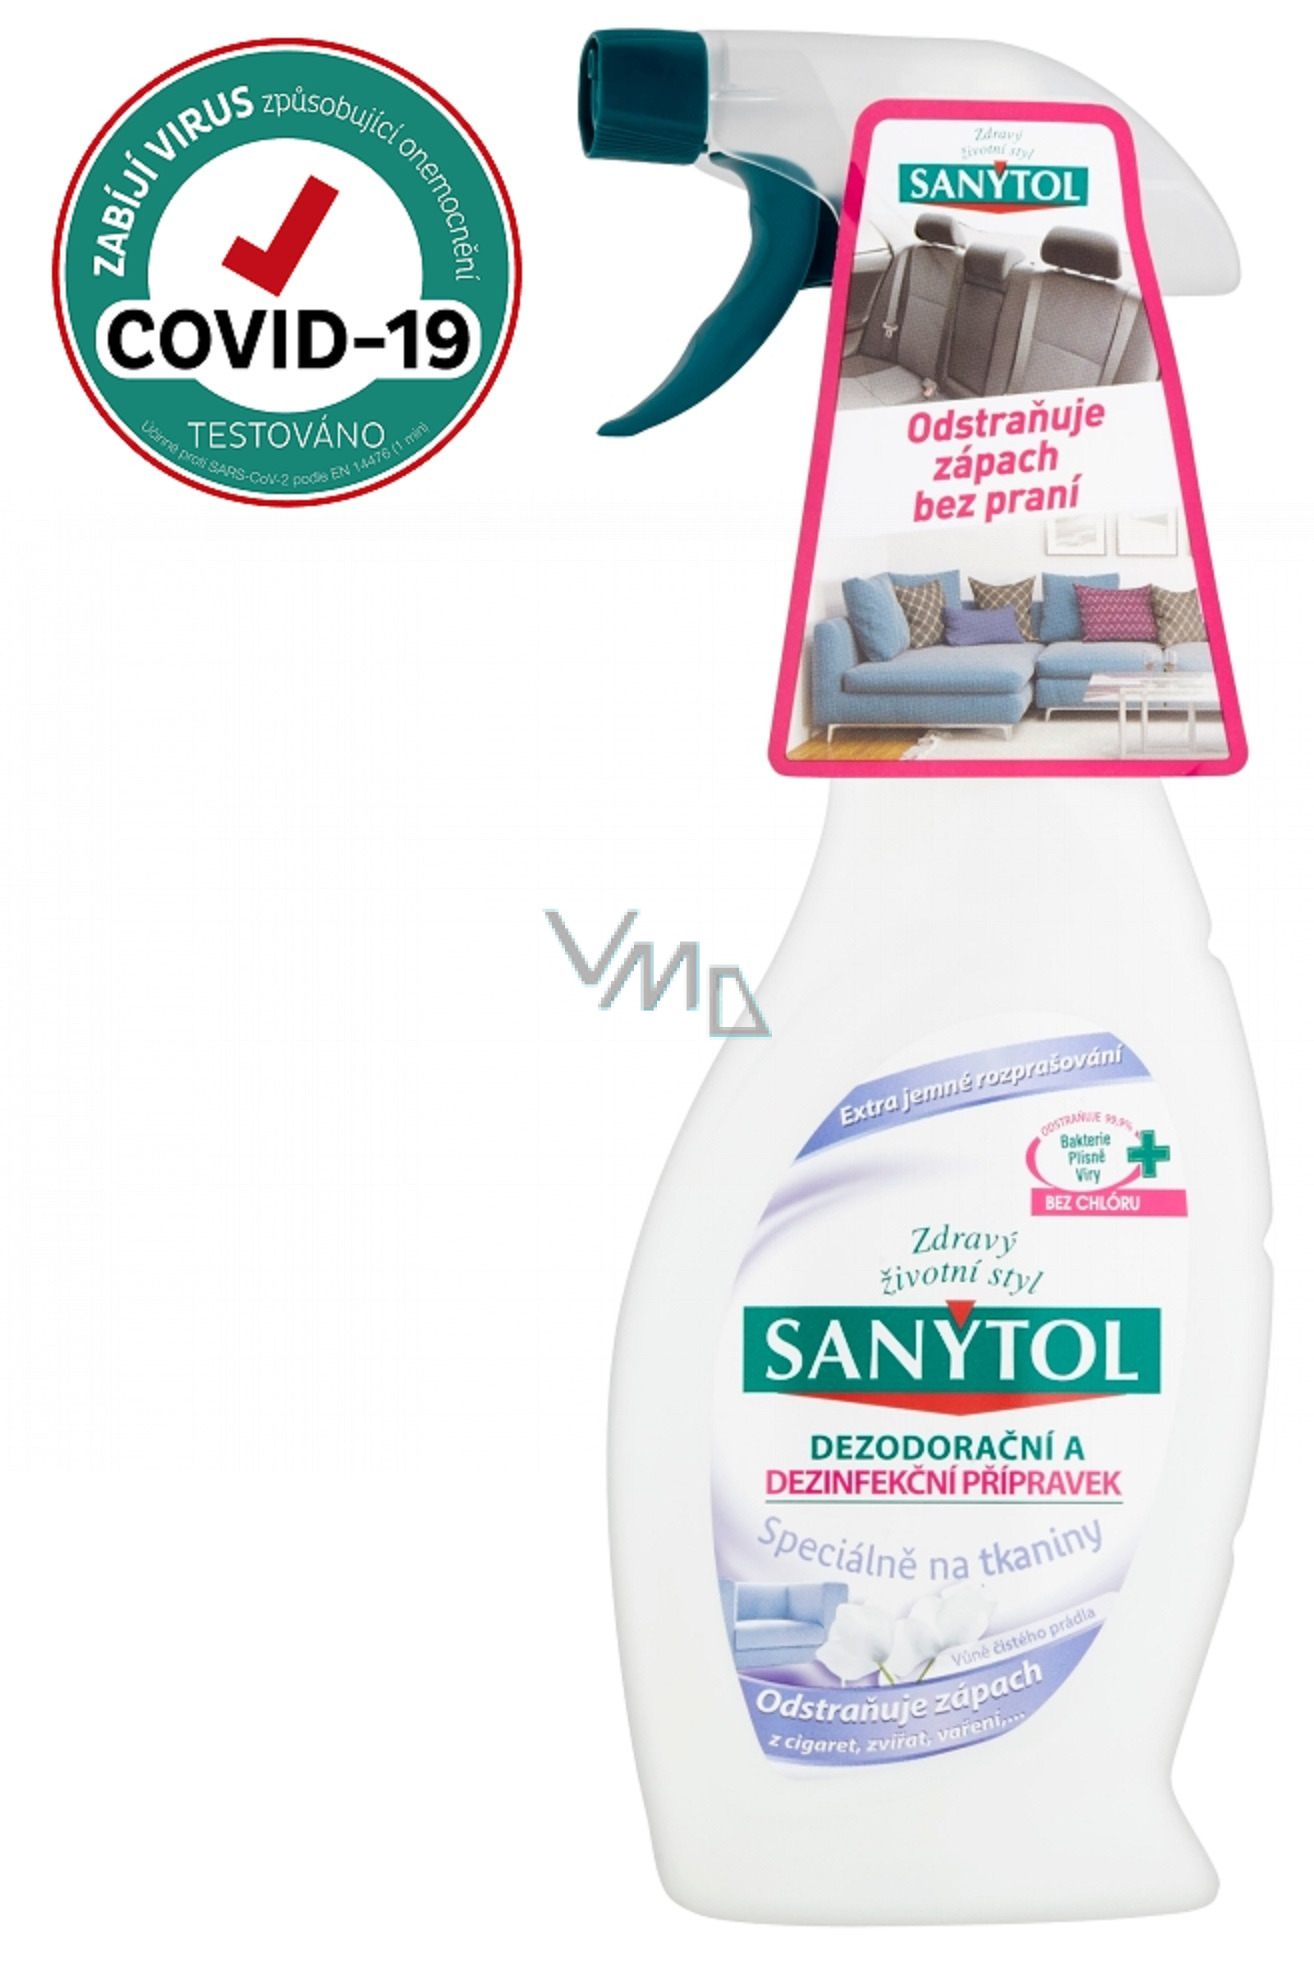 Sanytol Deodorant and disinfectant especially for fabric spray 500 ml - VMD  parfumerie - drogerie